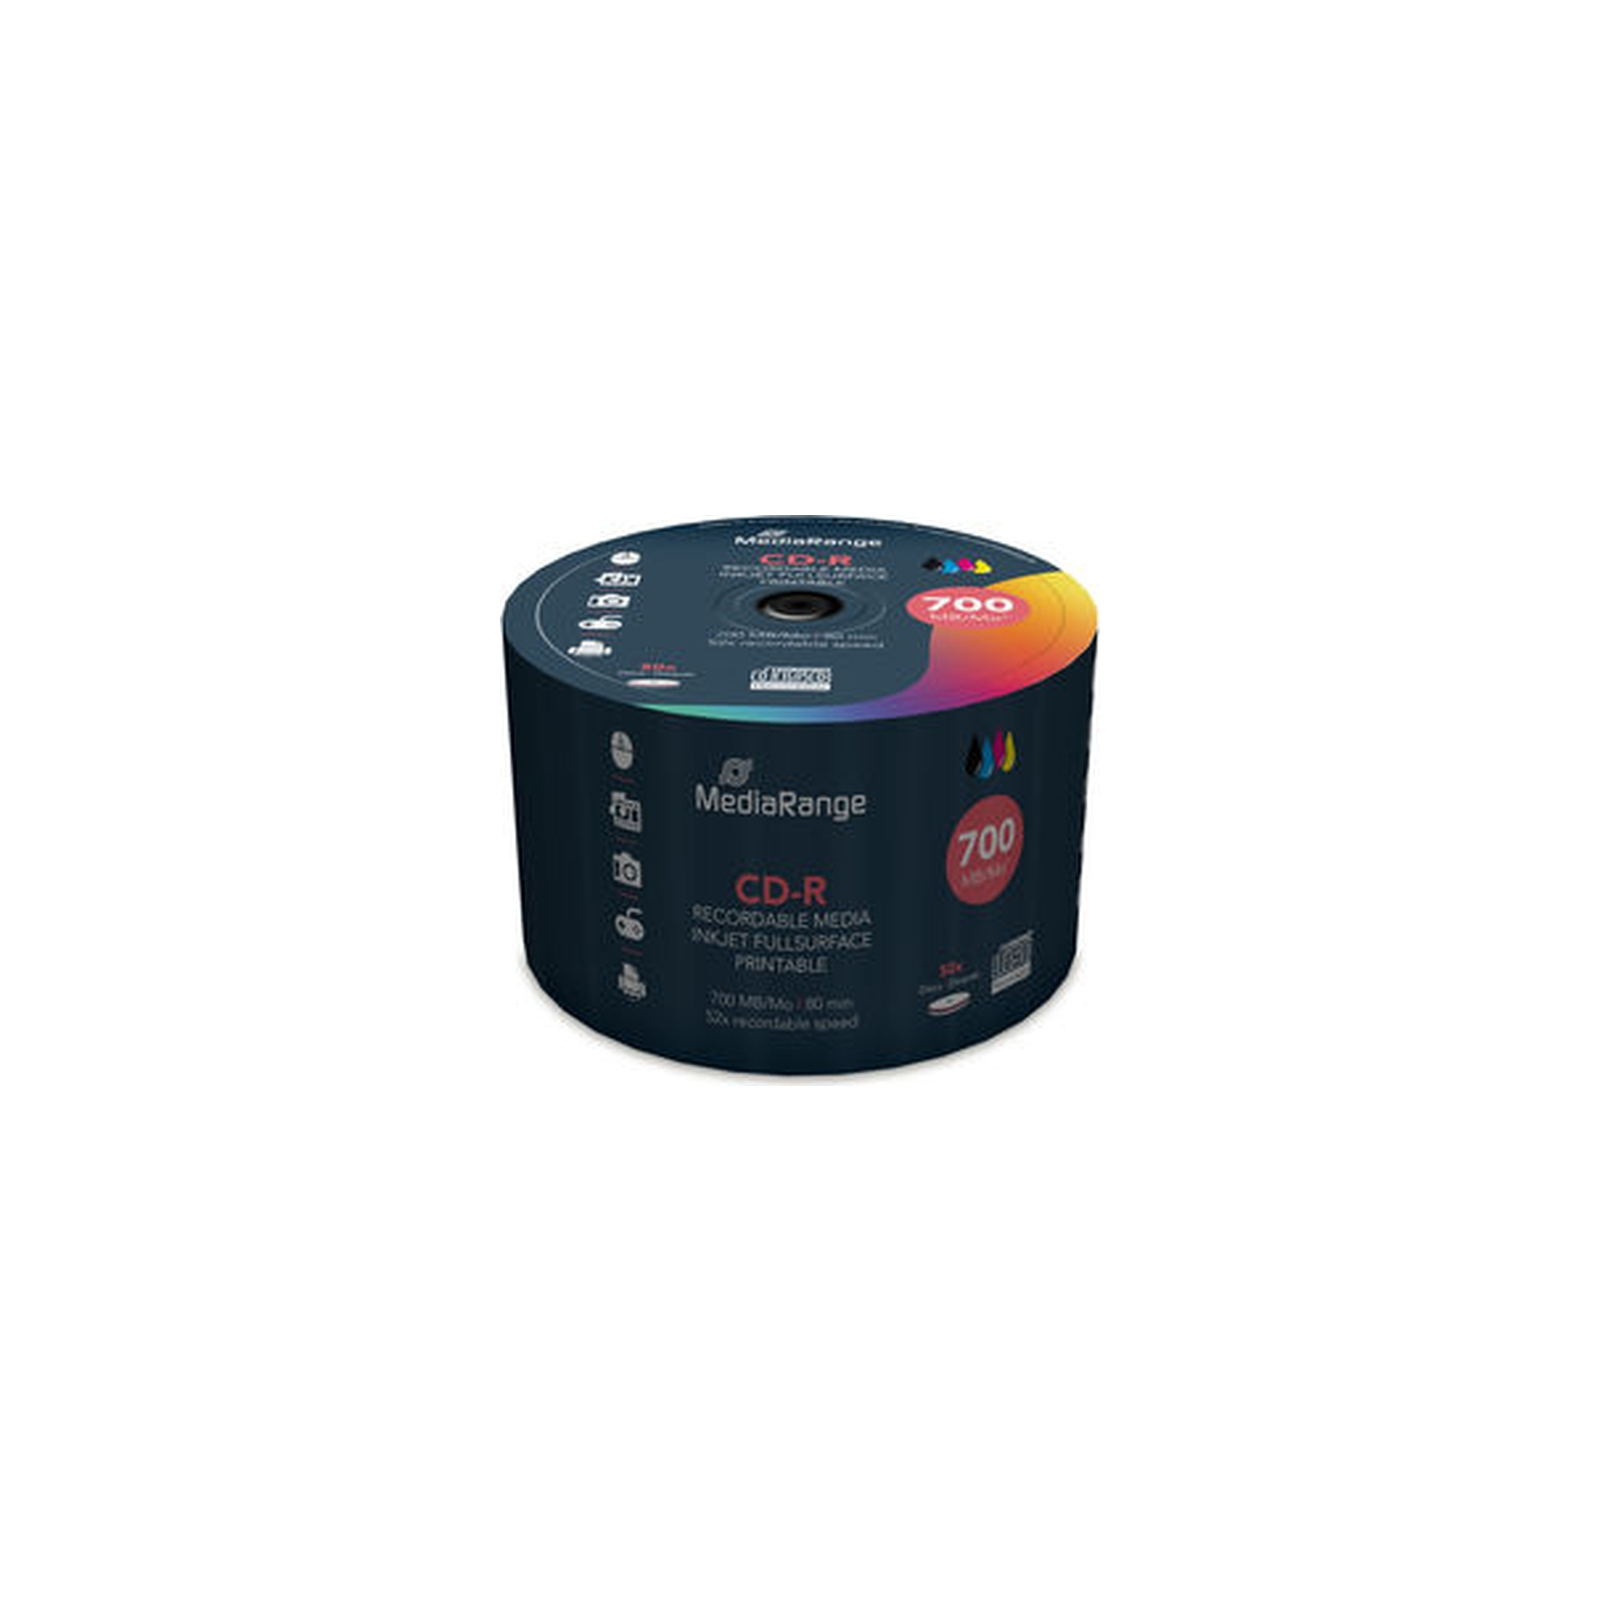 Диск CD Mediarange CD-R 700MB 80min 52x speed, inkjet fullsurface printable, Cake 50 (MR208) изображение 2